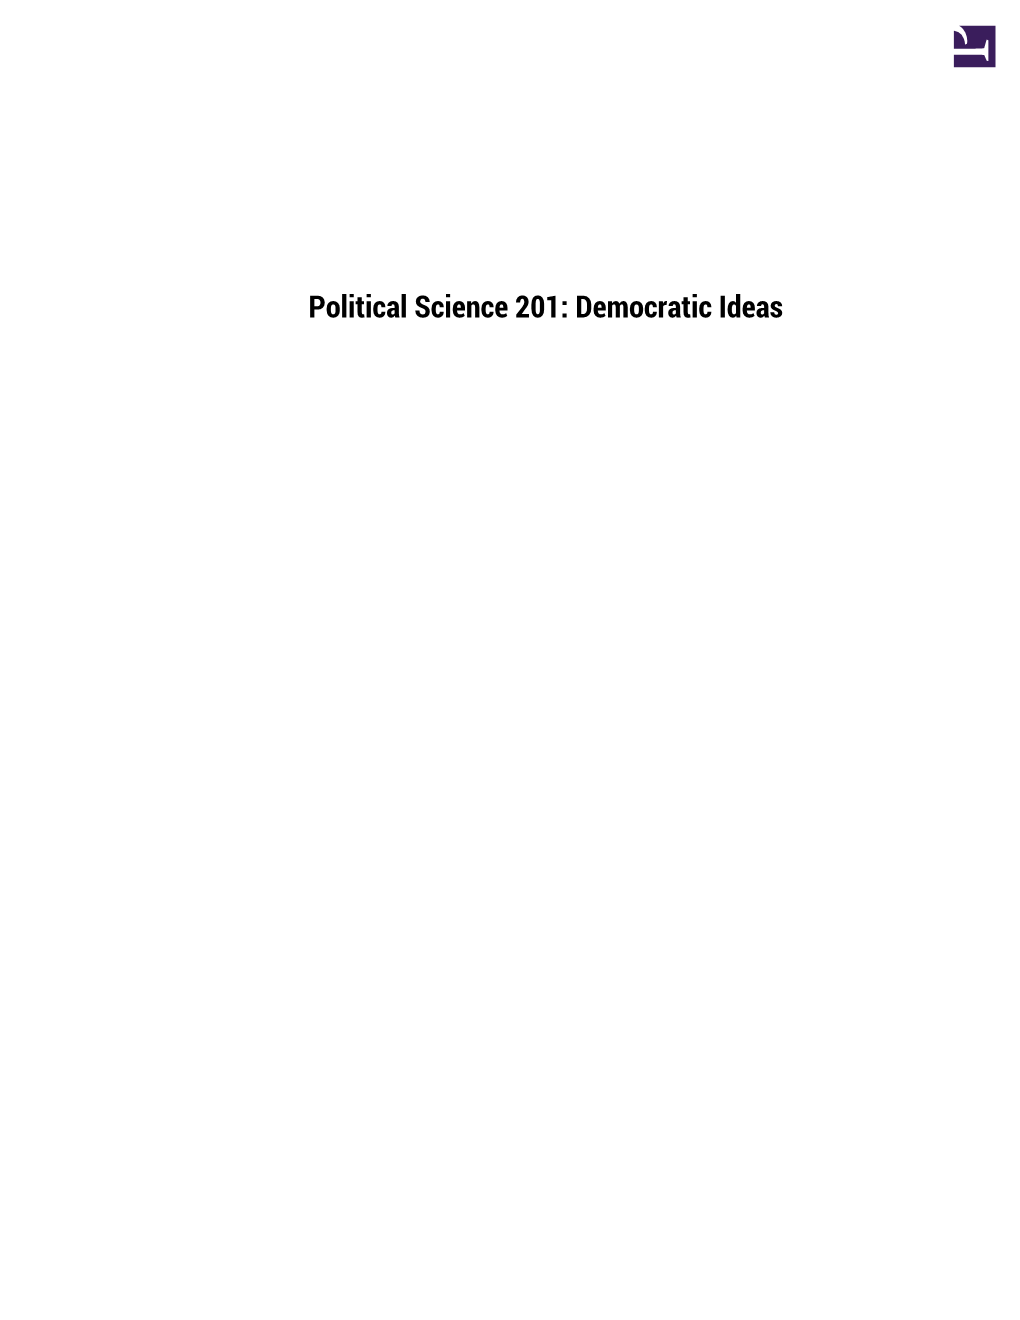 Political Science 201: Democratic Ideas Political Science 201: Democratic Ideas